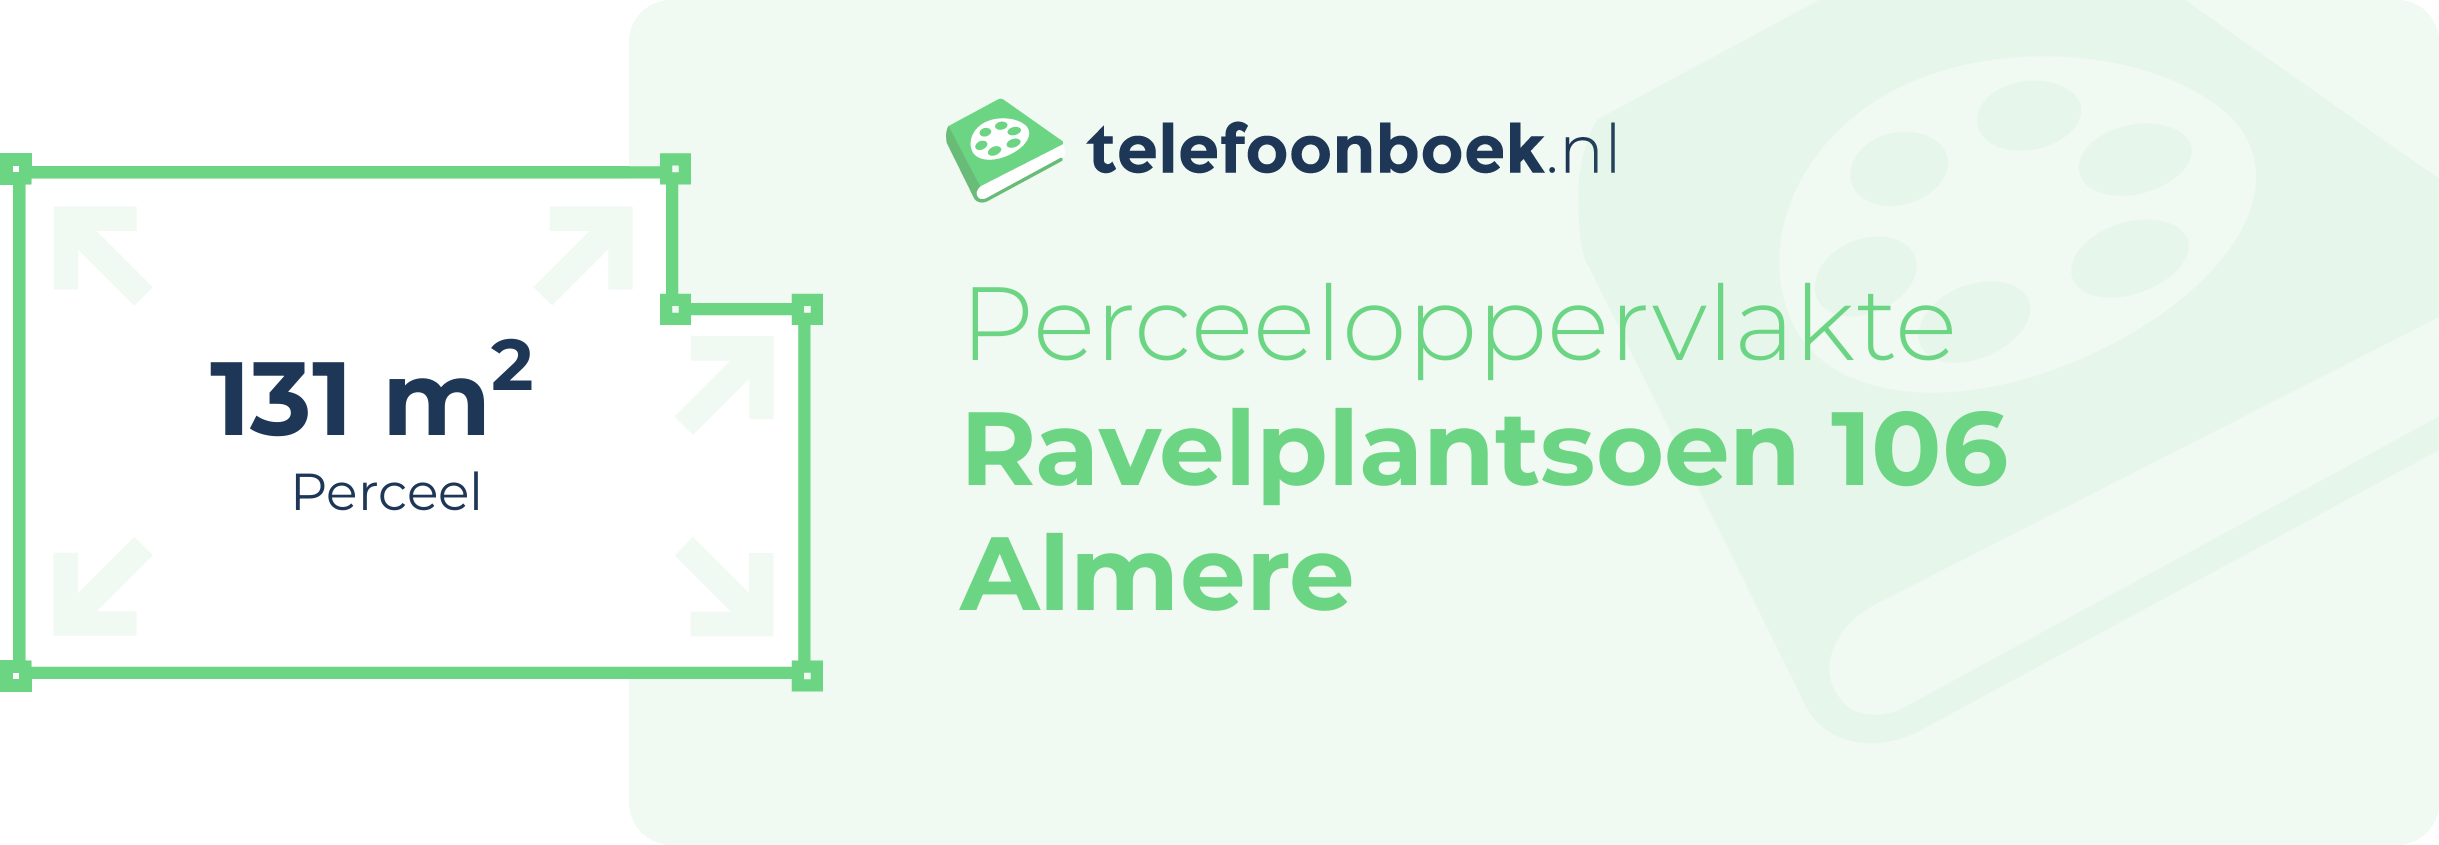 Perceeloppervlakte Ravelplantsoen 106 Almere